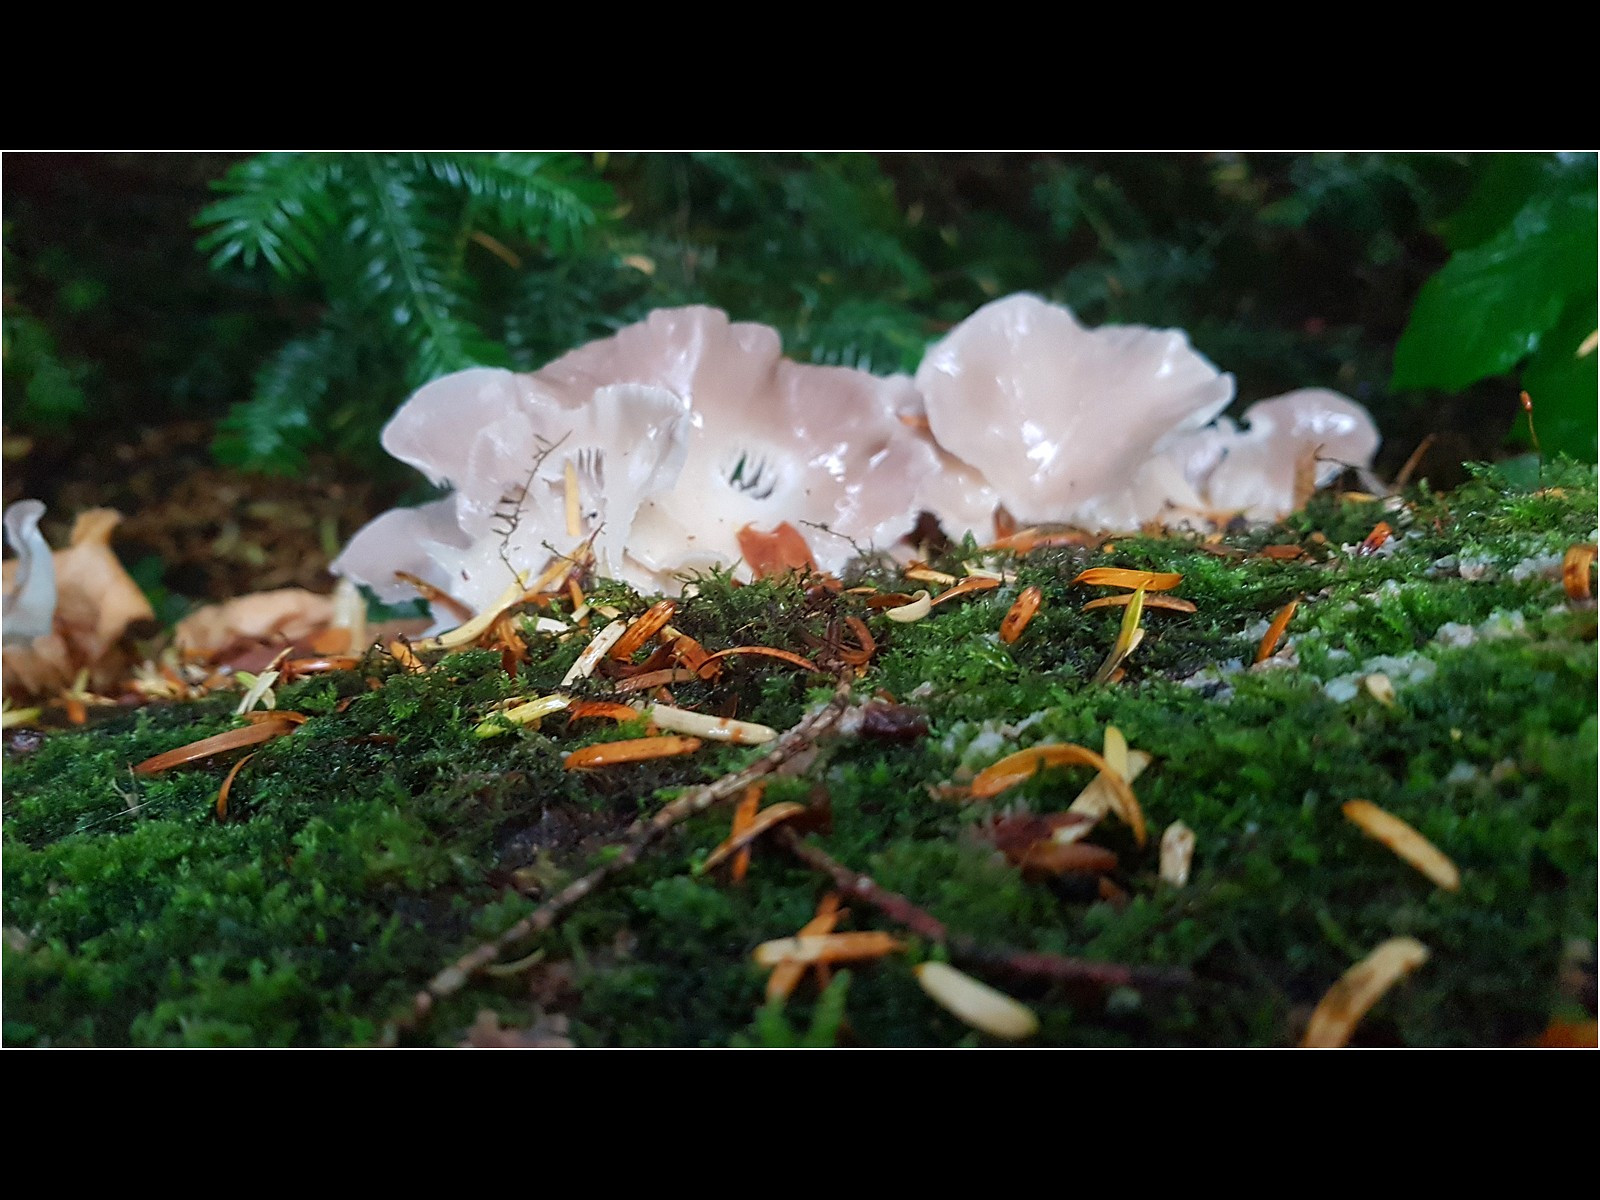 17. Porcelain Fungi